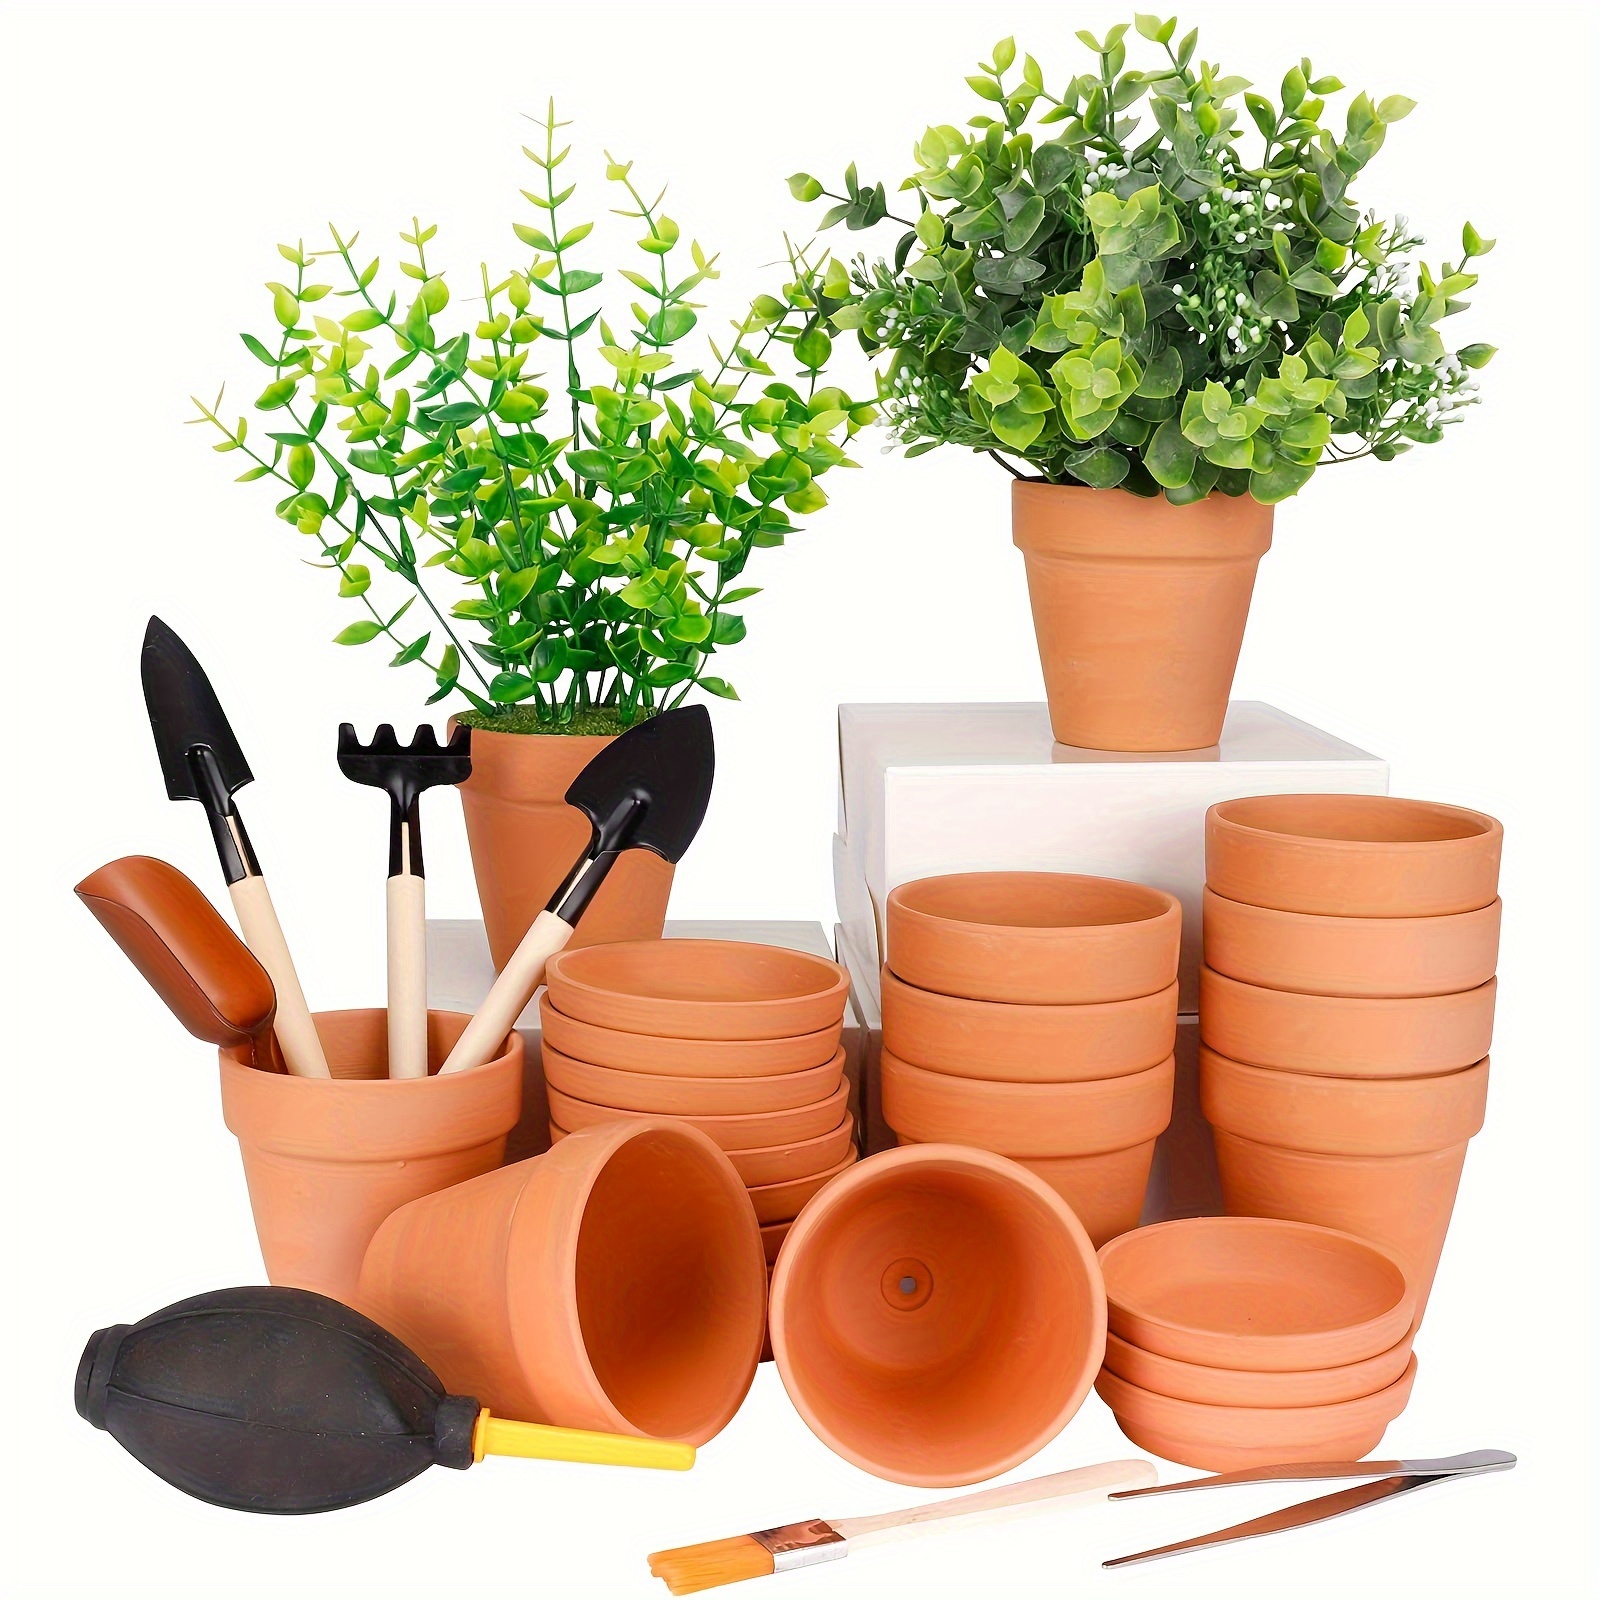 

12 Pcs 3 Inches Clay Pots For Plants, Terracotta Pots, Mini Plant Pots For Succulent Display, Indoor, Outdoor, Home, Office, Wedding Decor